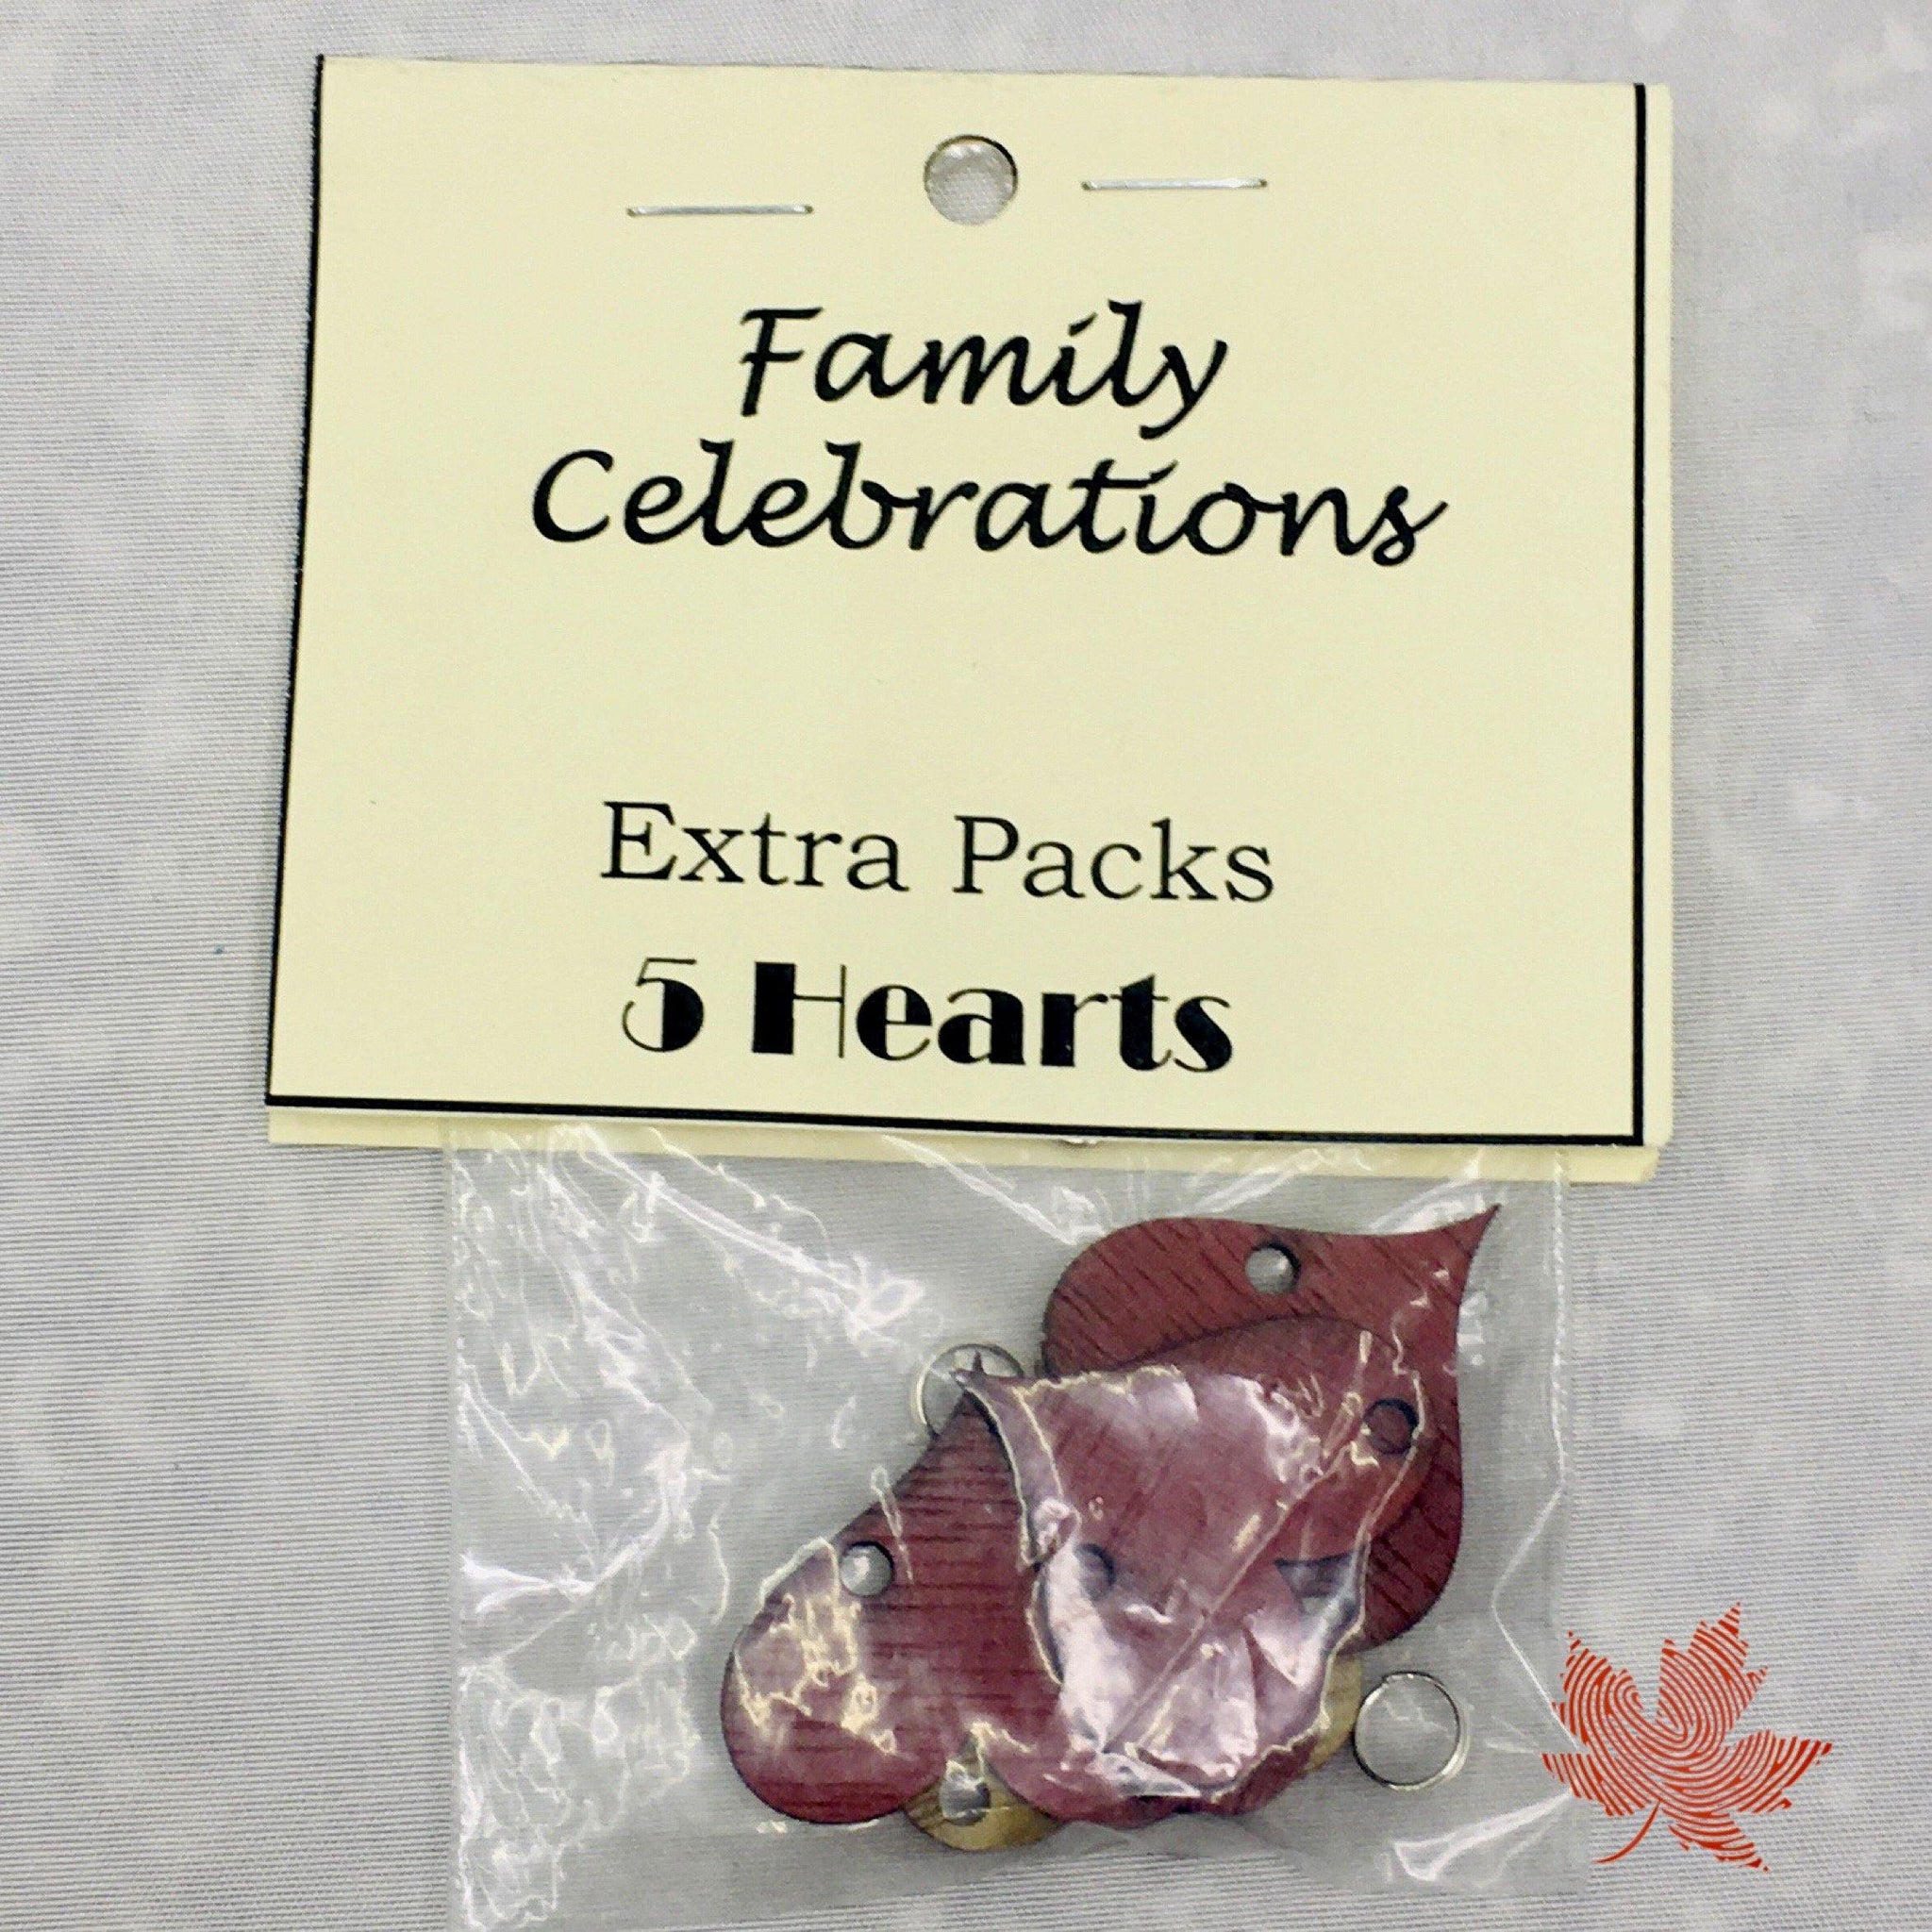 FT Family Celebration Extra Pack - 5 Hearts - TWB Home Decor